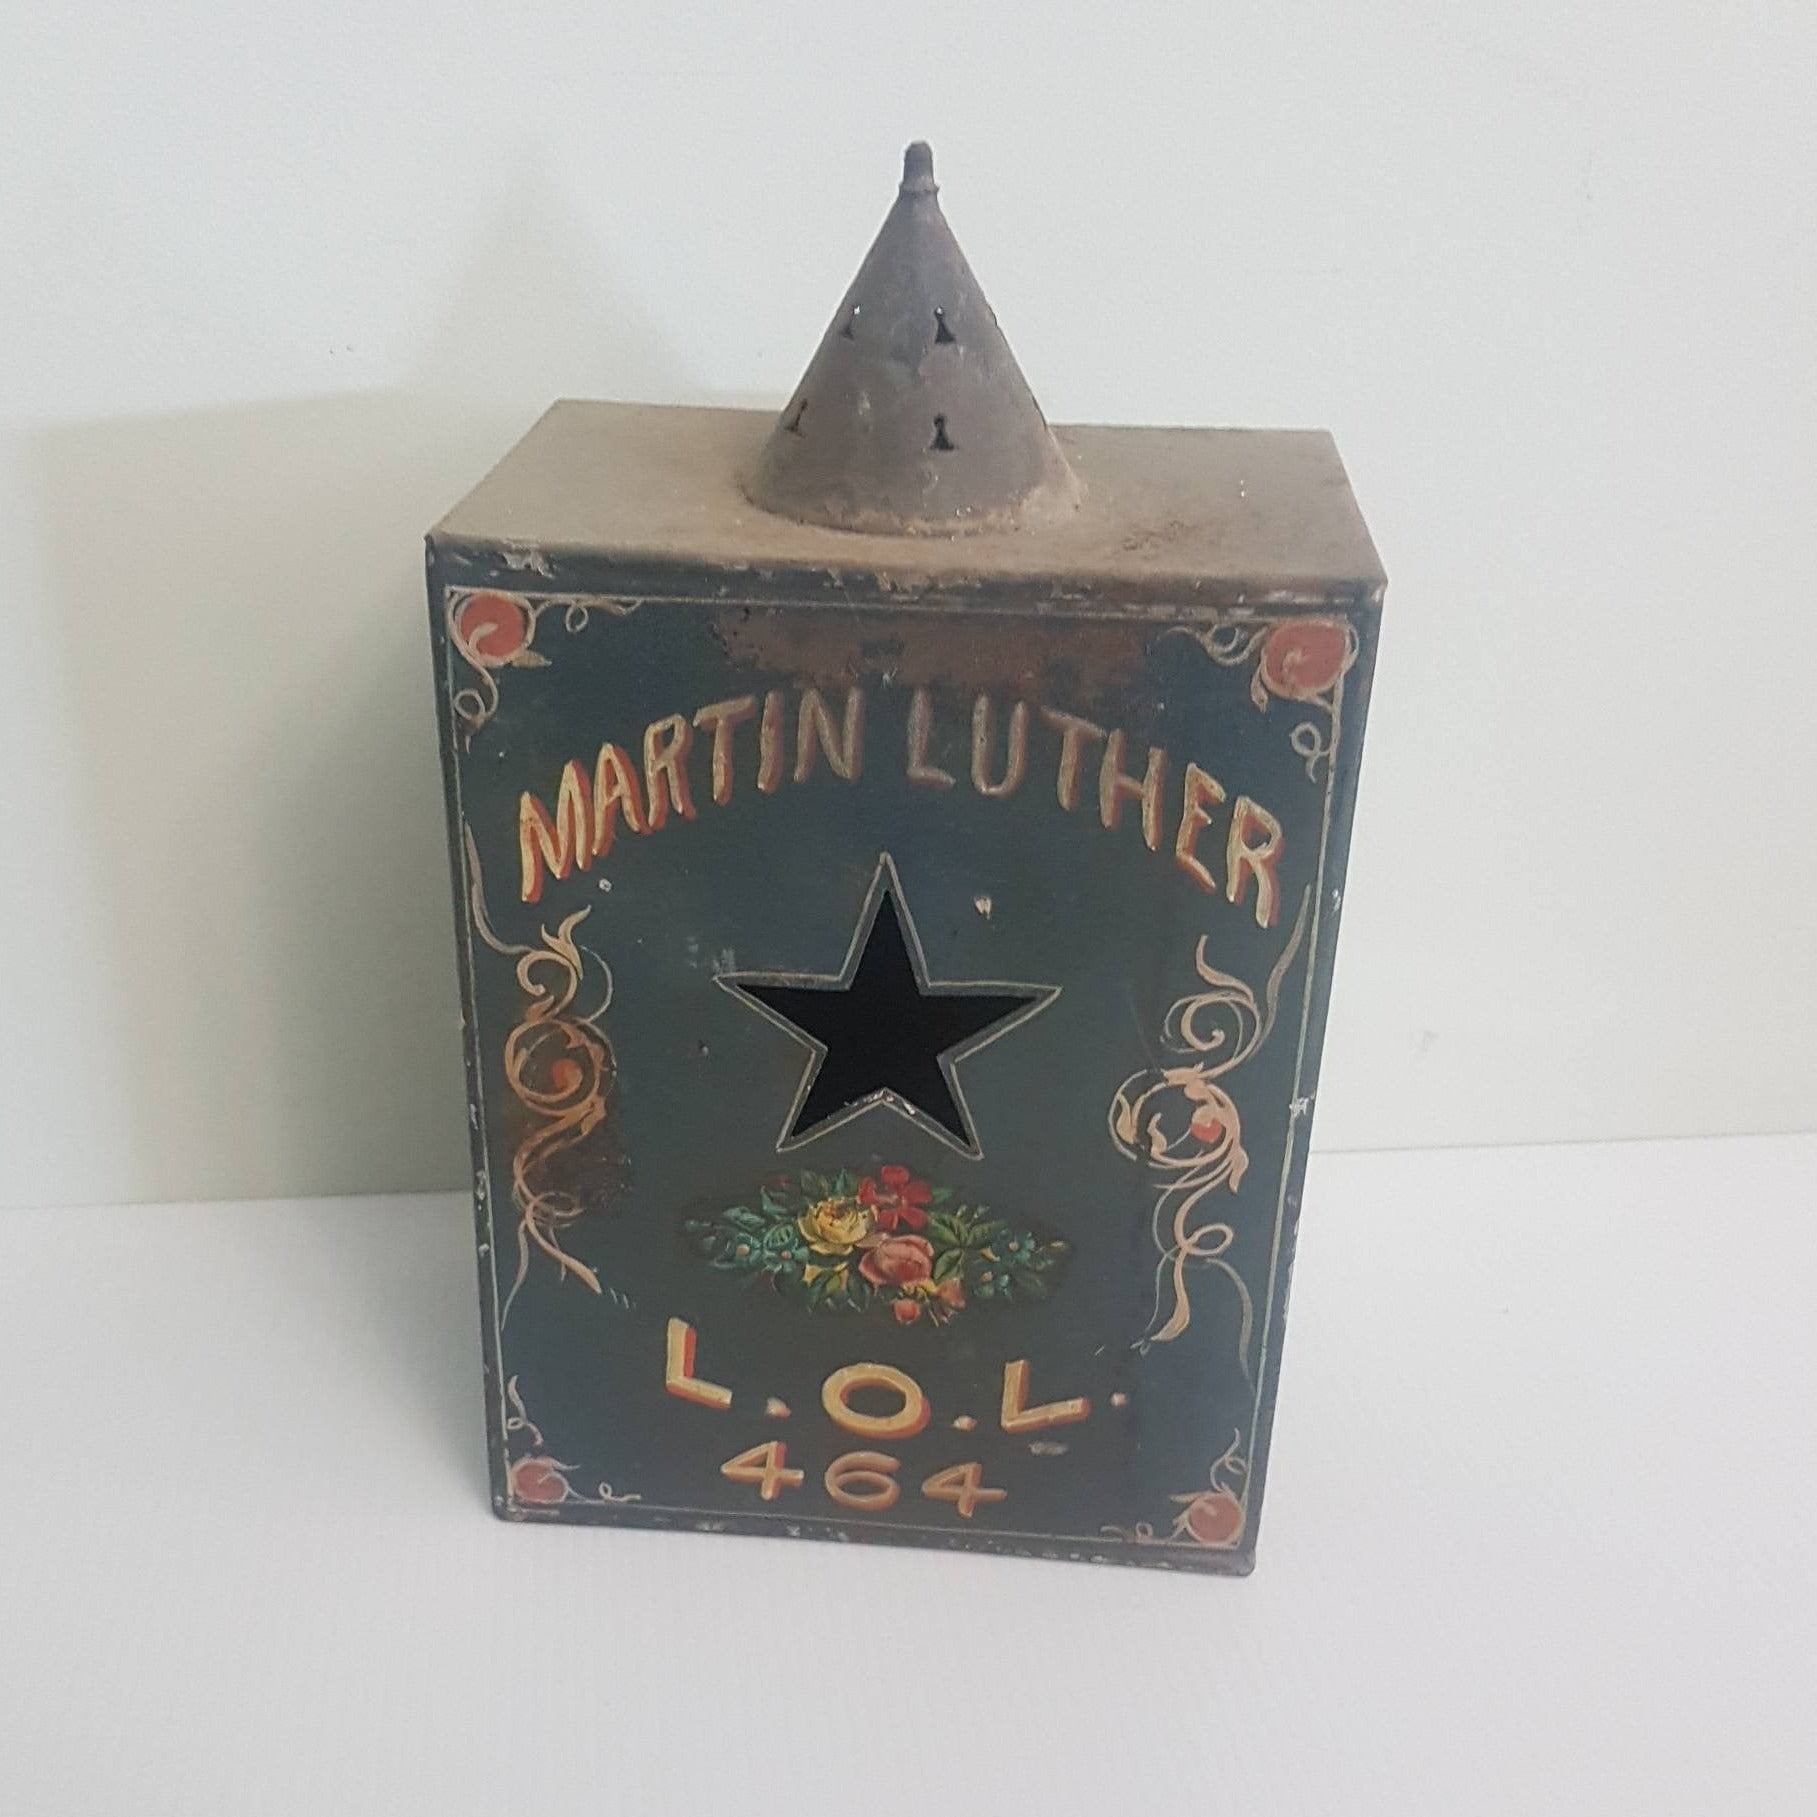 martin luther loyal orange lodge candle box